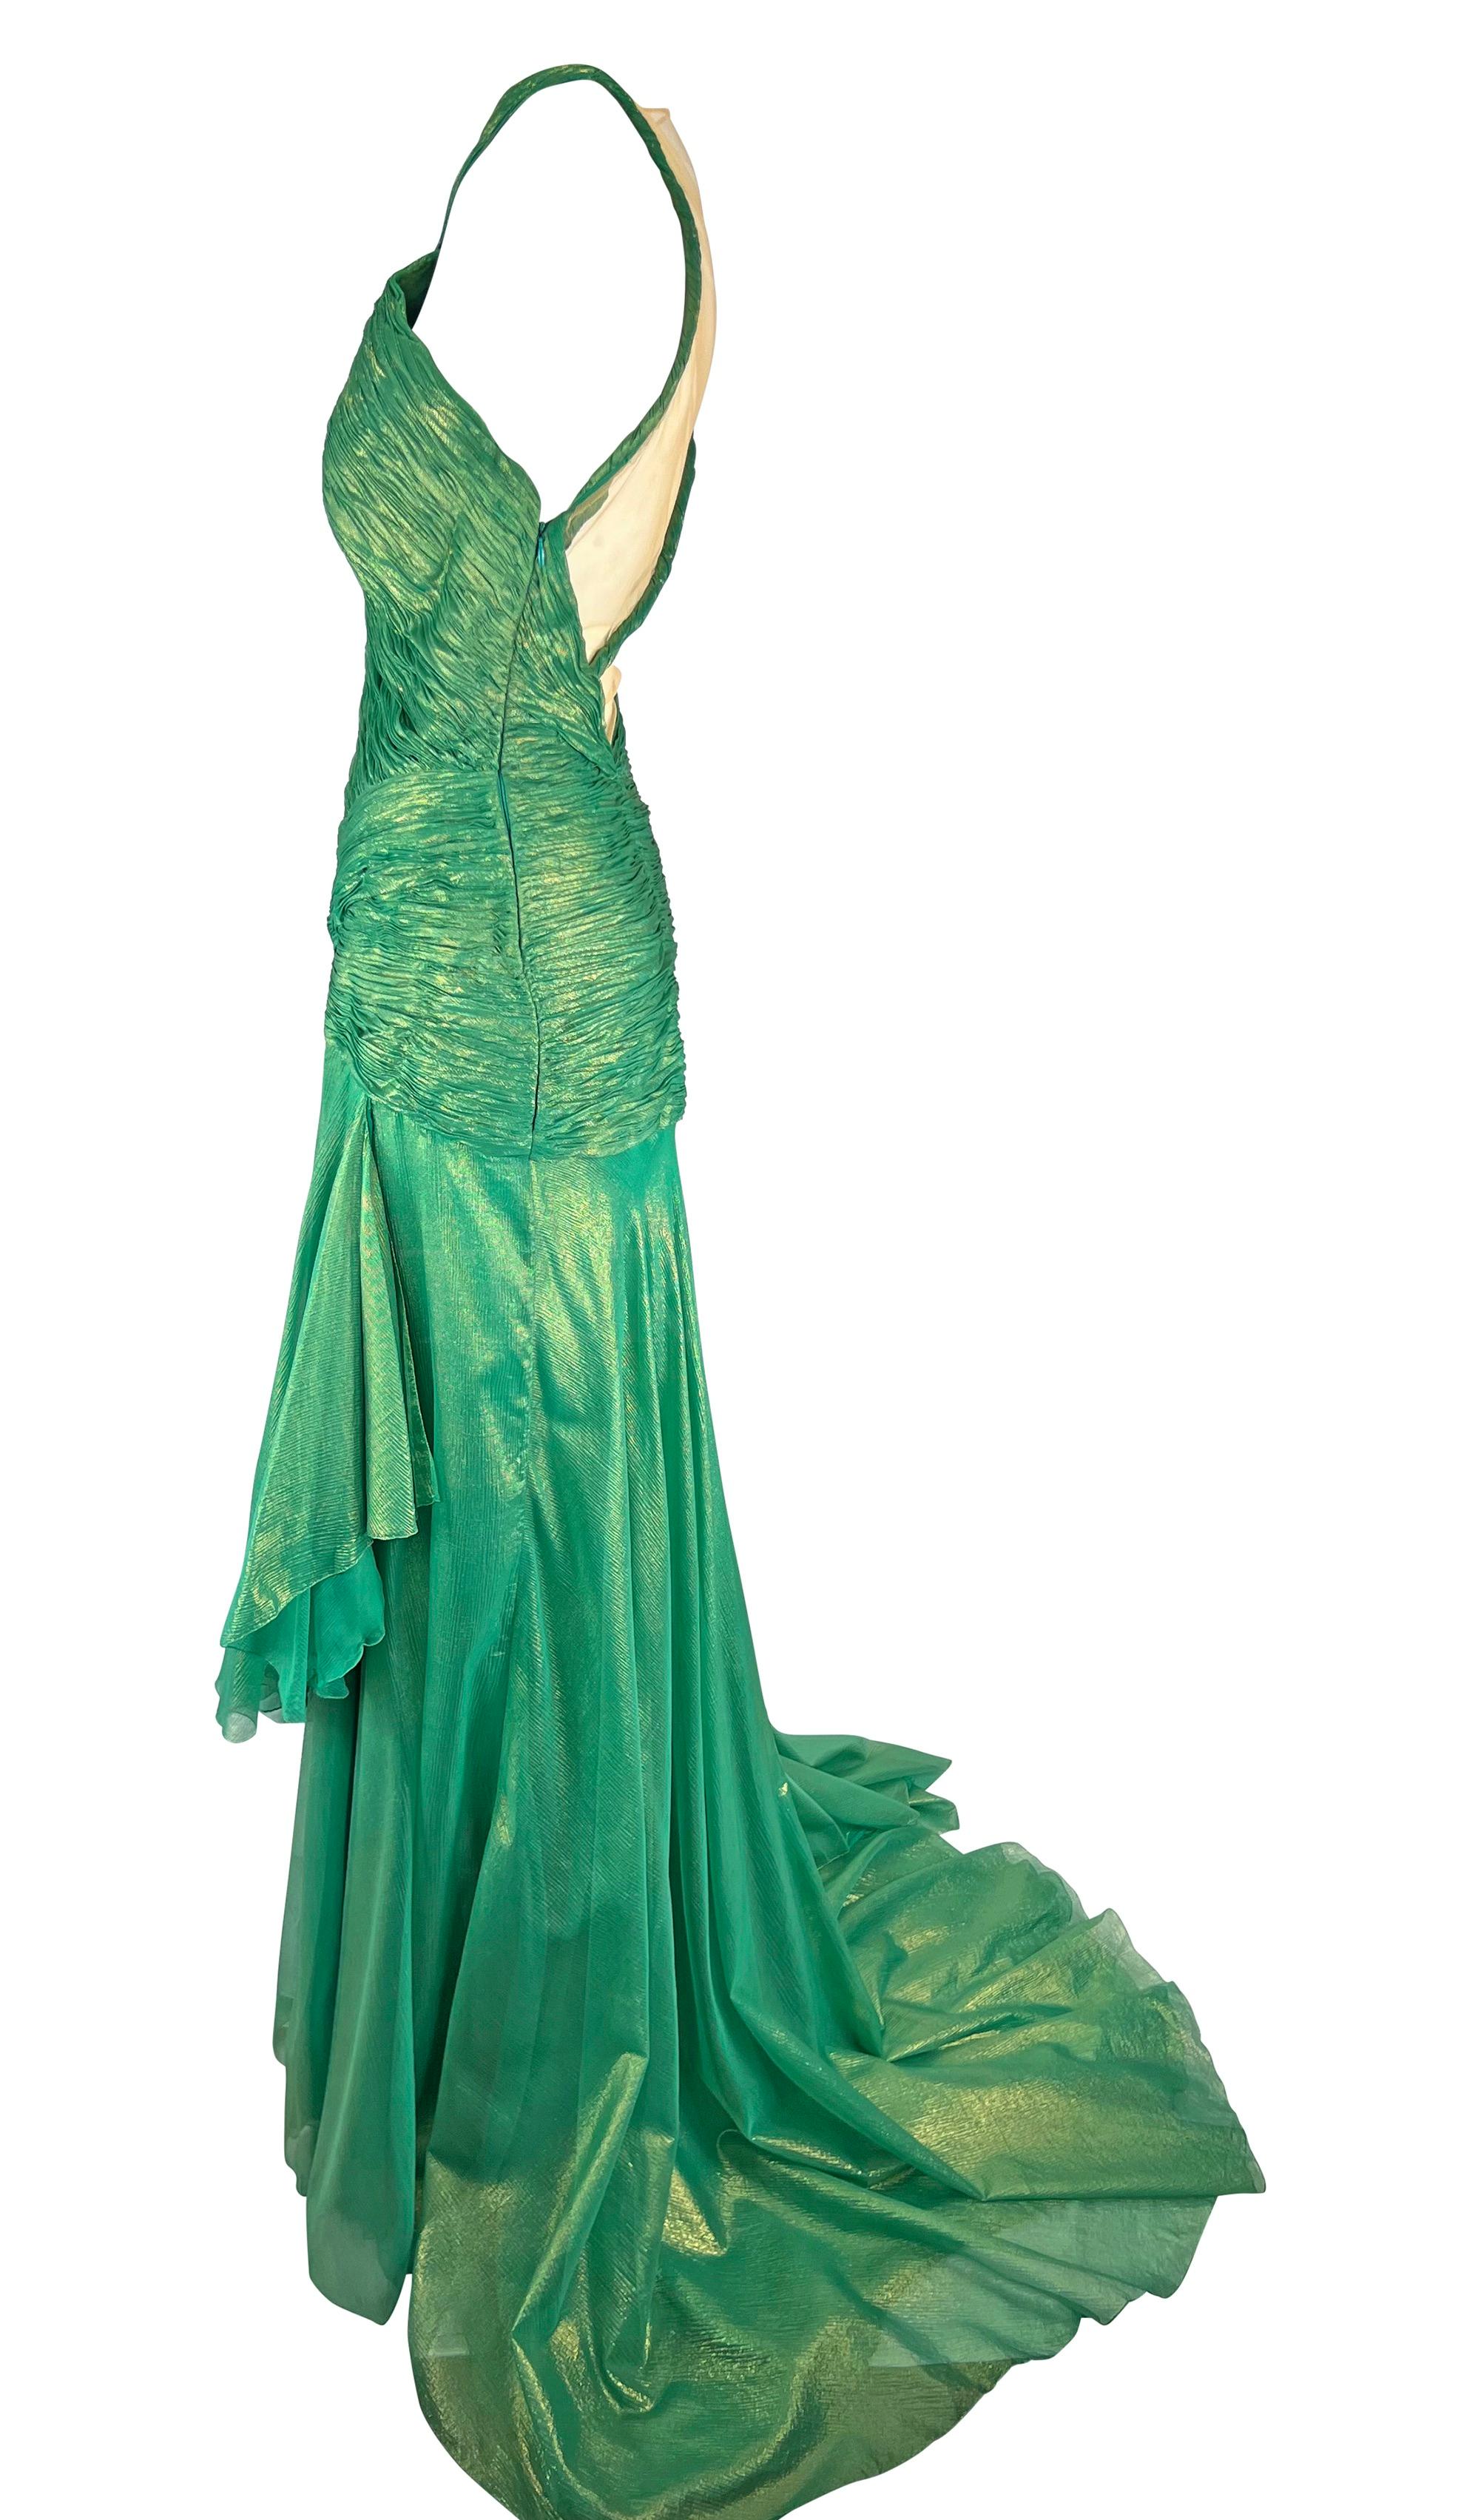 S/S 2004 Atelier Versace by Donatella Metallic Green Halterneck Runway Gown  For Sale 1